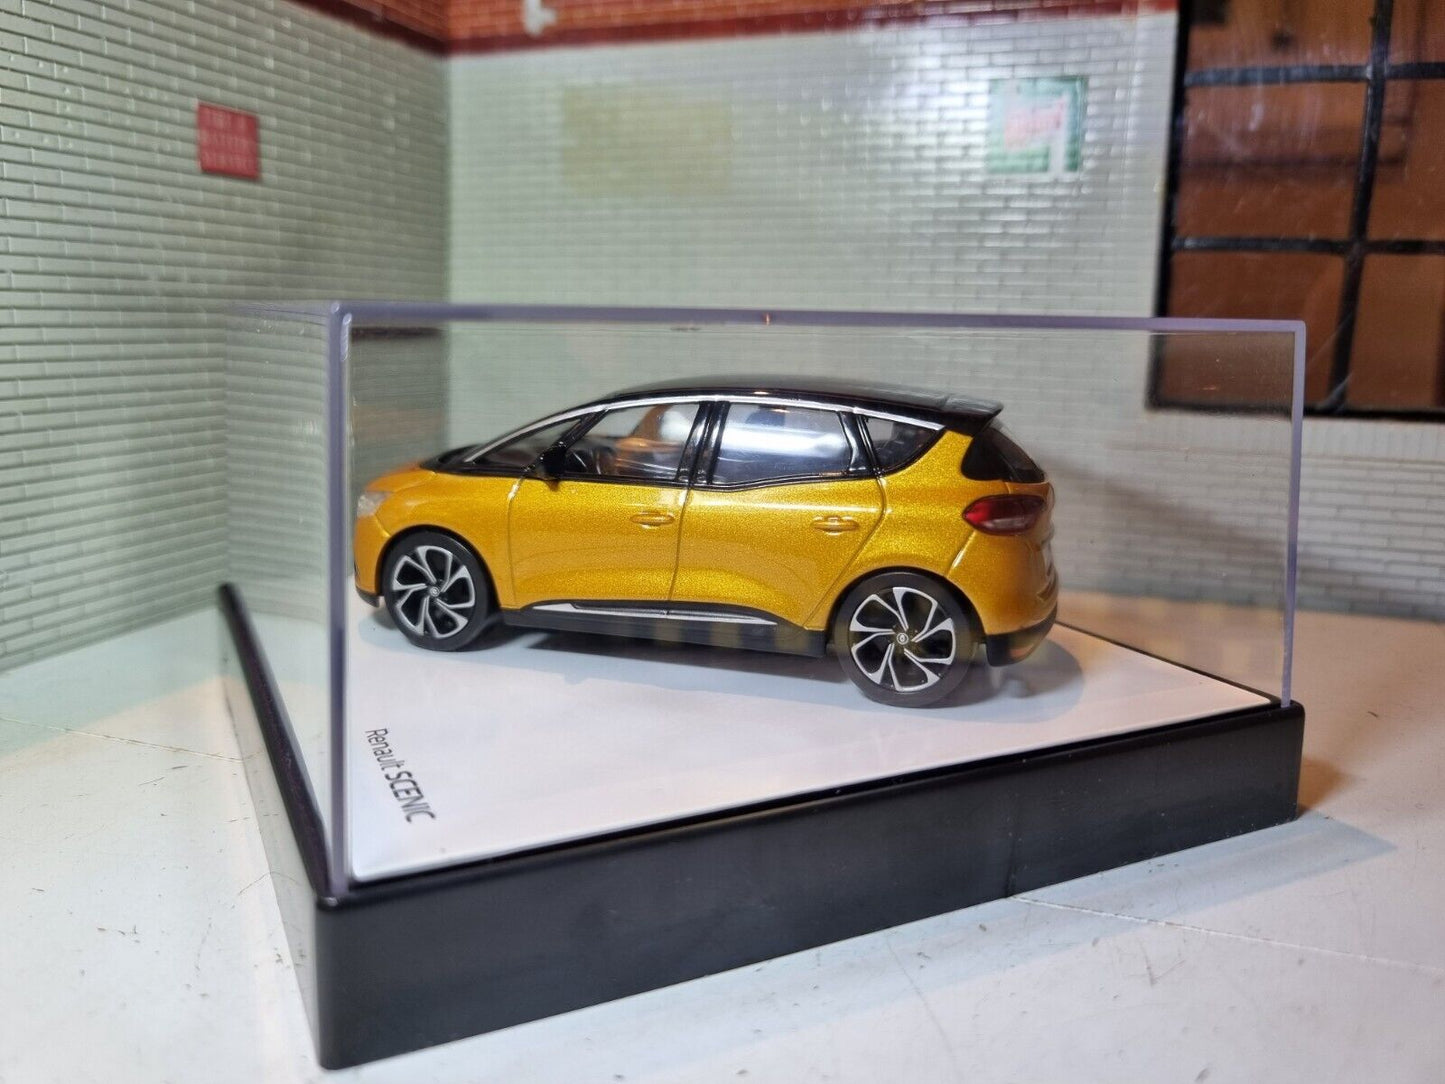 Renault 2016 Scenic Norev 1:43